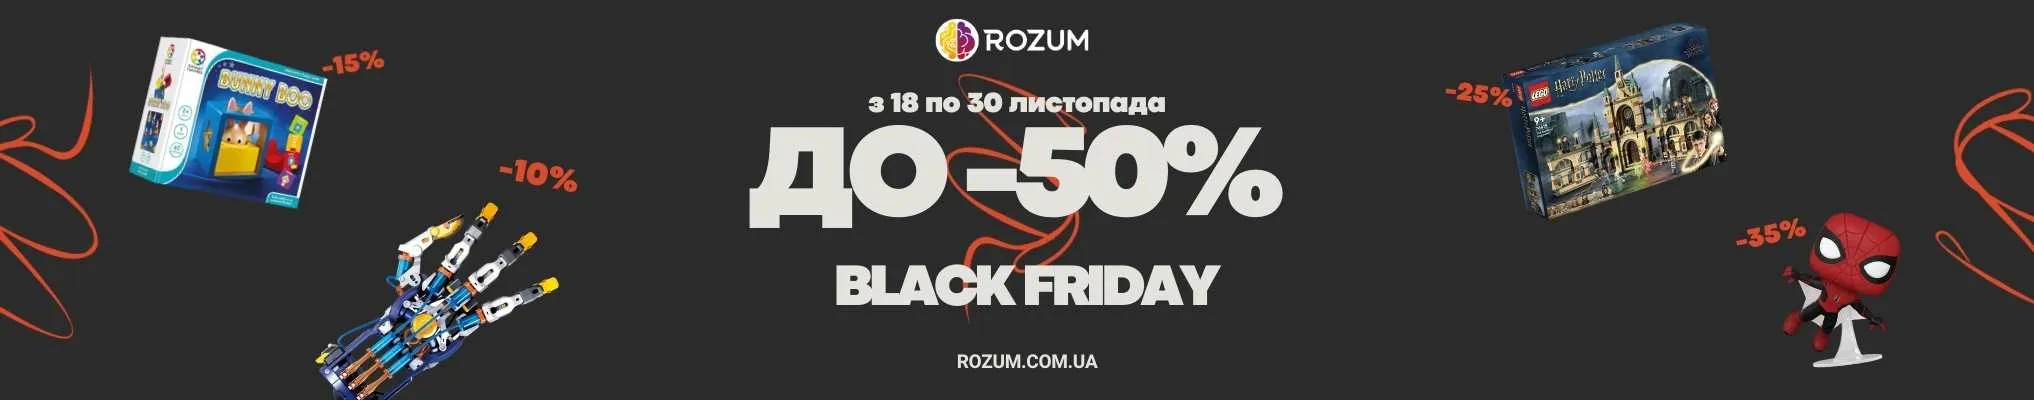 Black Friday до -50%